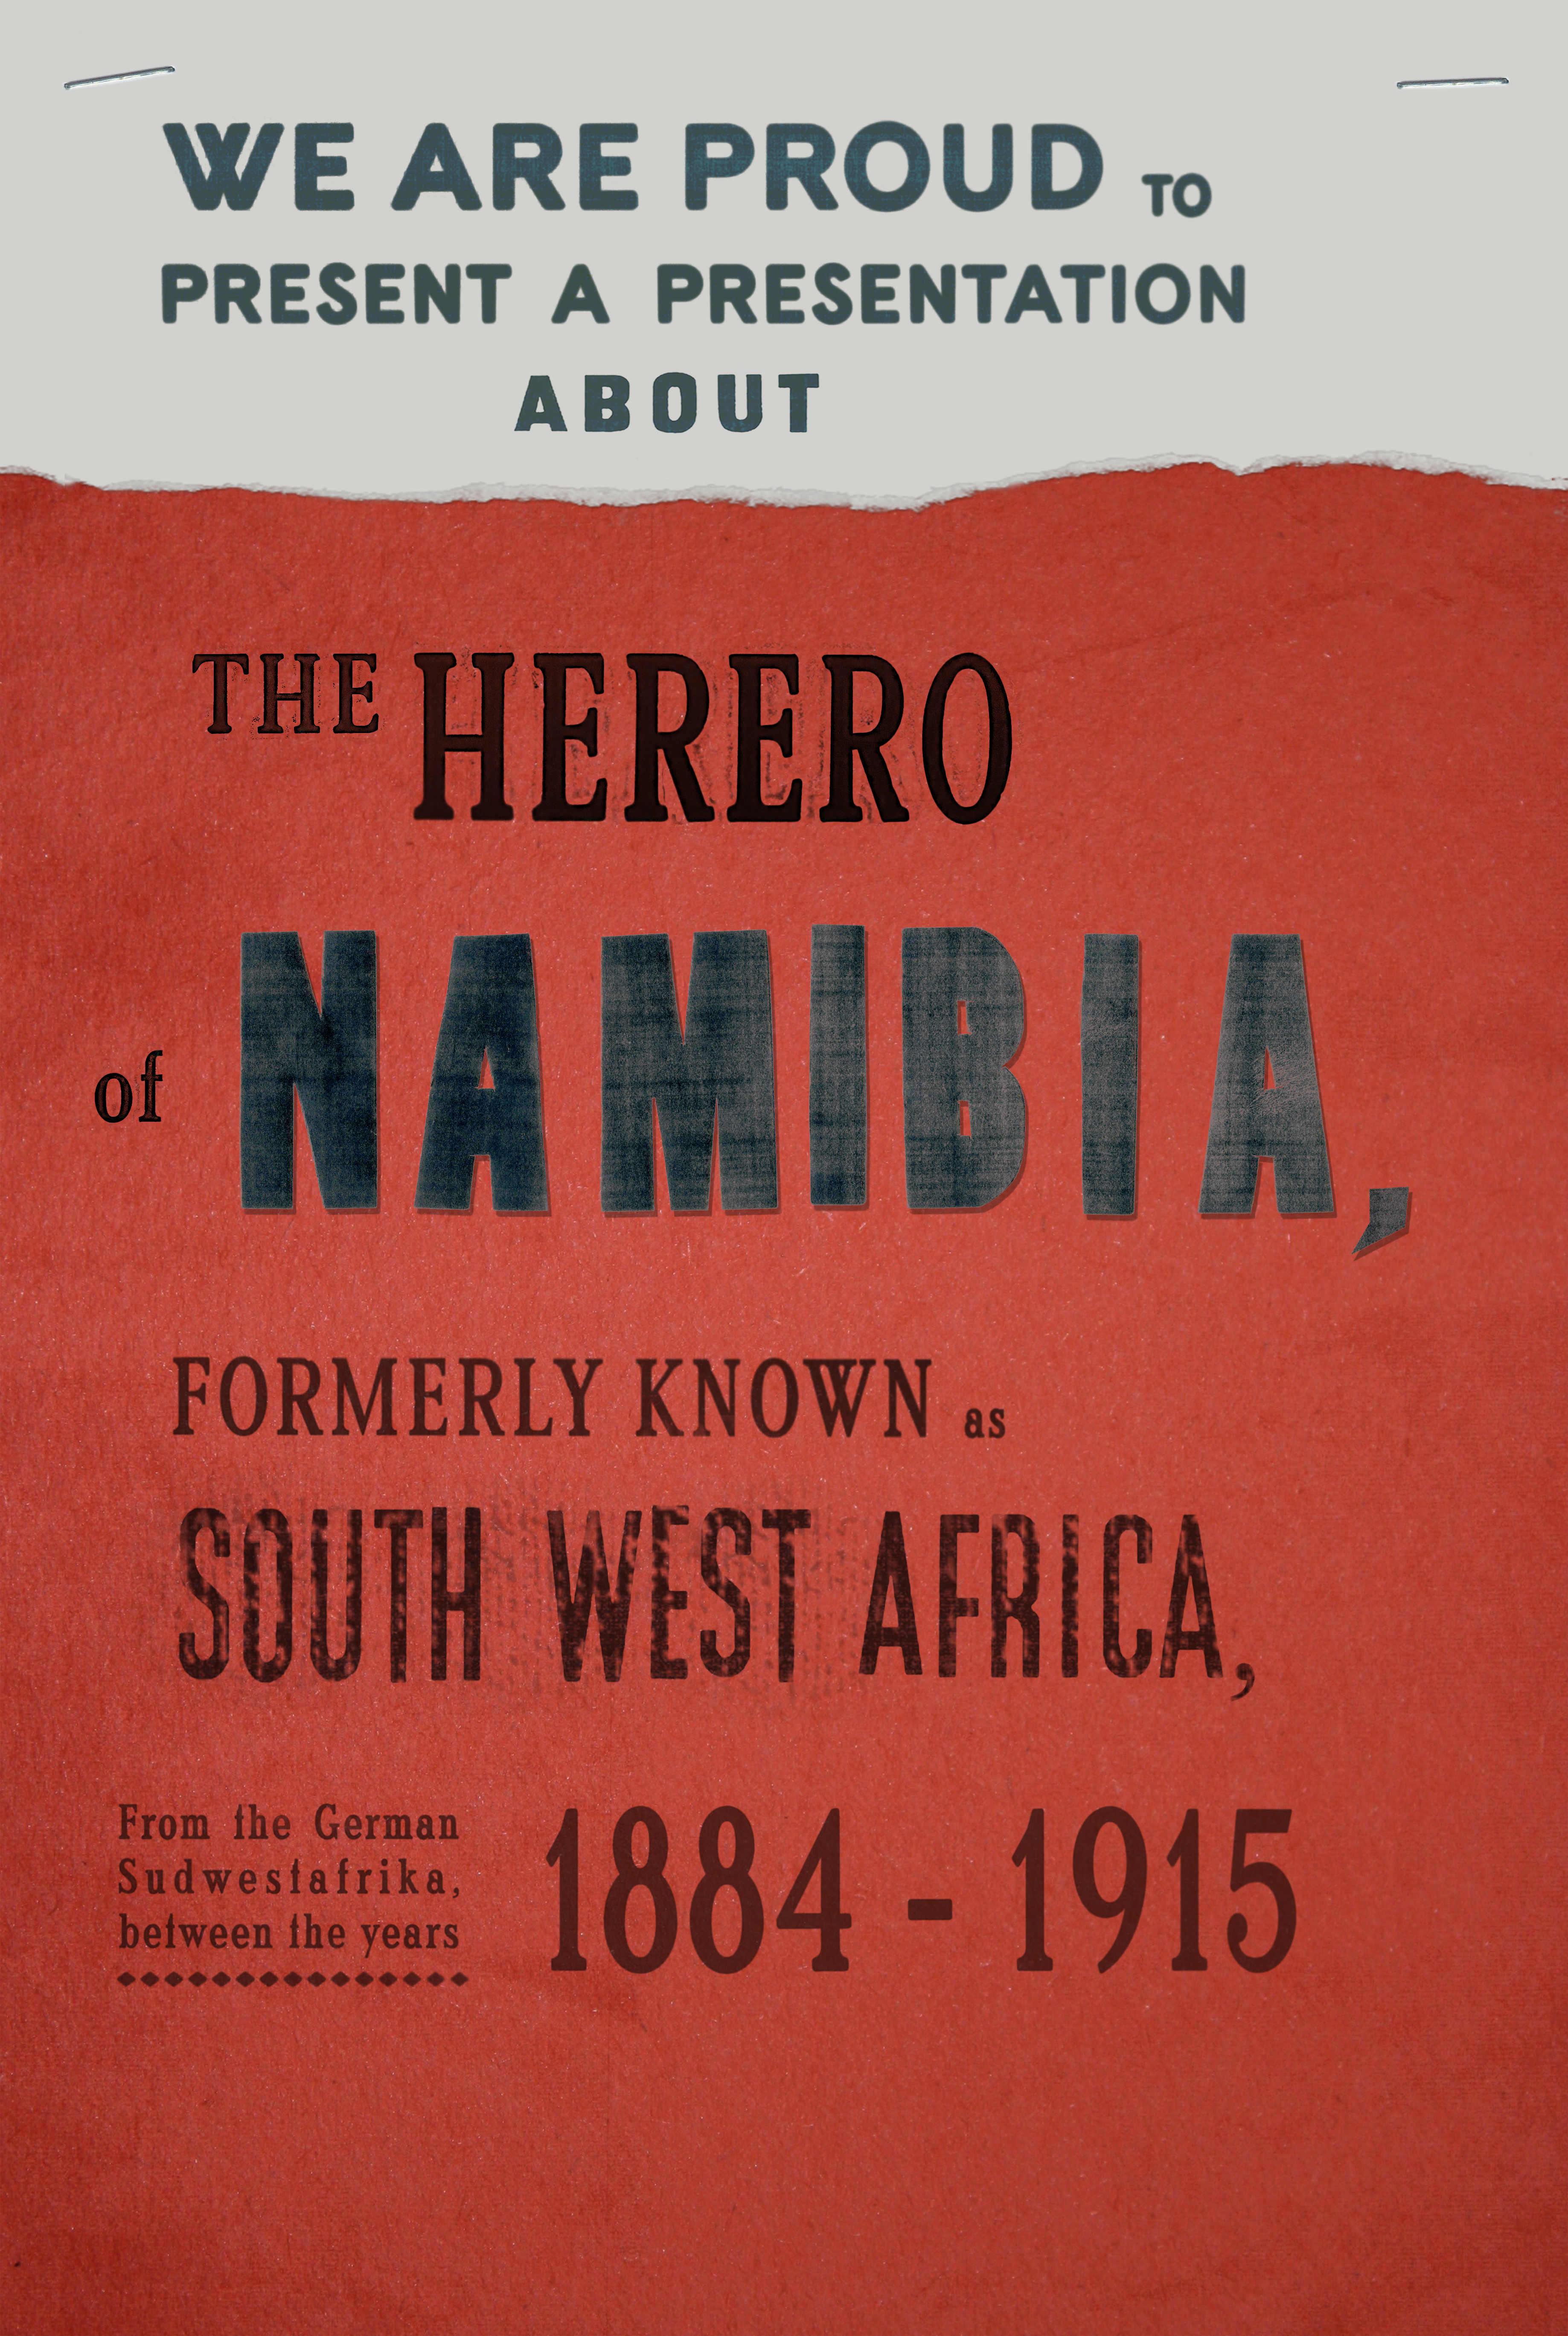 herero of namibia